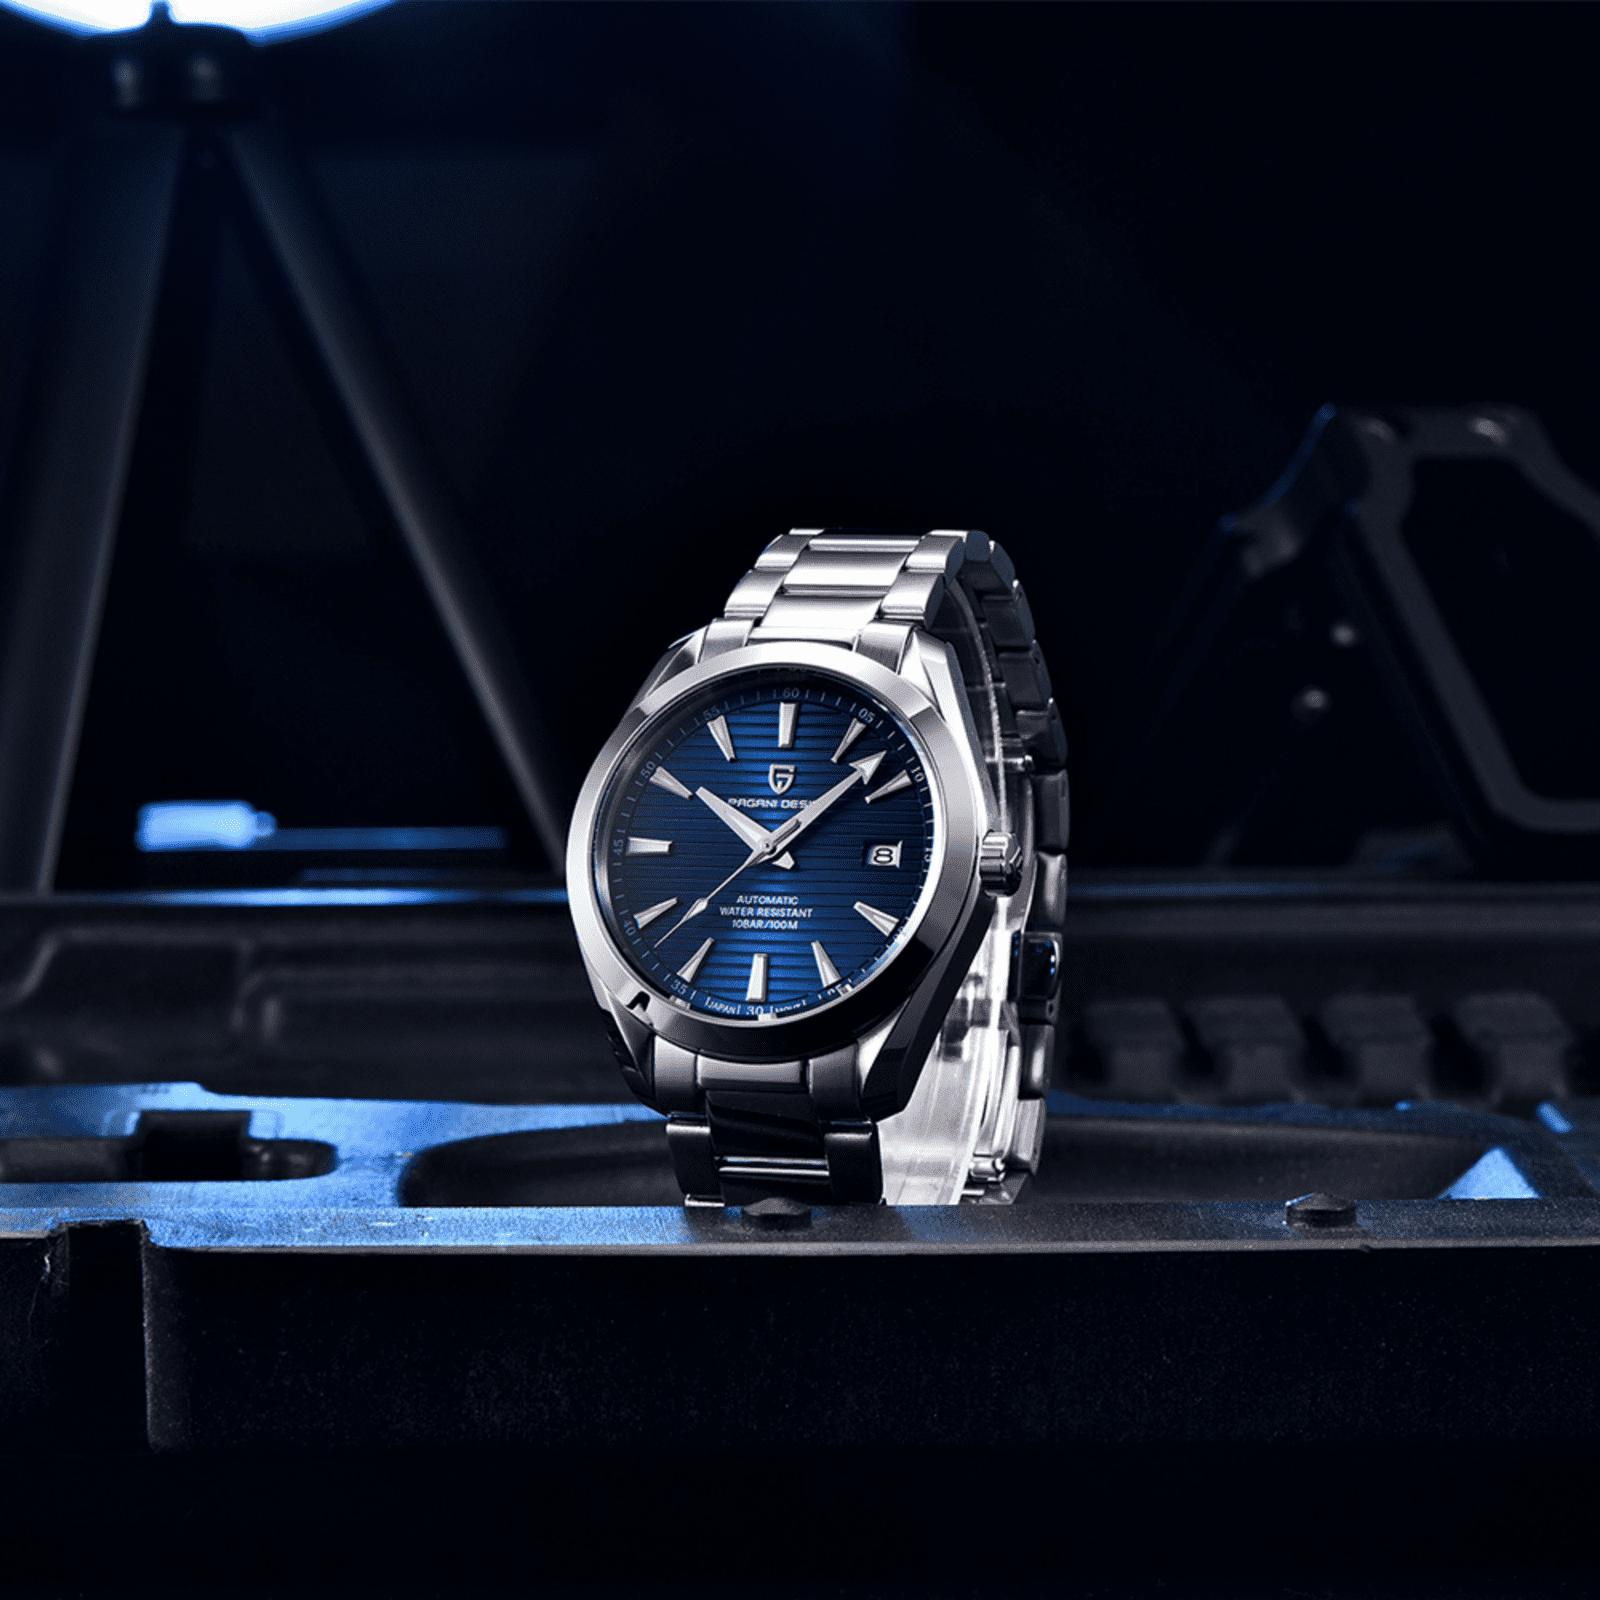 Pagani Design PD-1688 40MM (Seiko NH35A Automatic Movement) Mechanical Watch 100M Waterproof Dive Watch Sapphire Stainless Steel Watch Aqua Terra - DREAM WATCHES